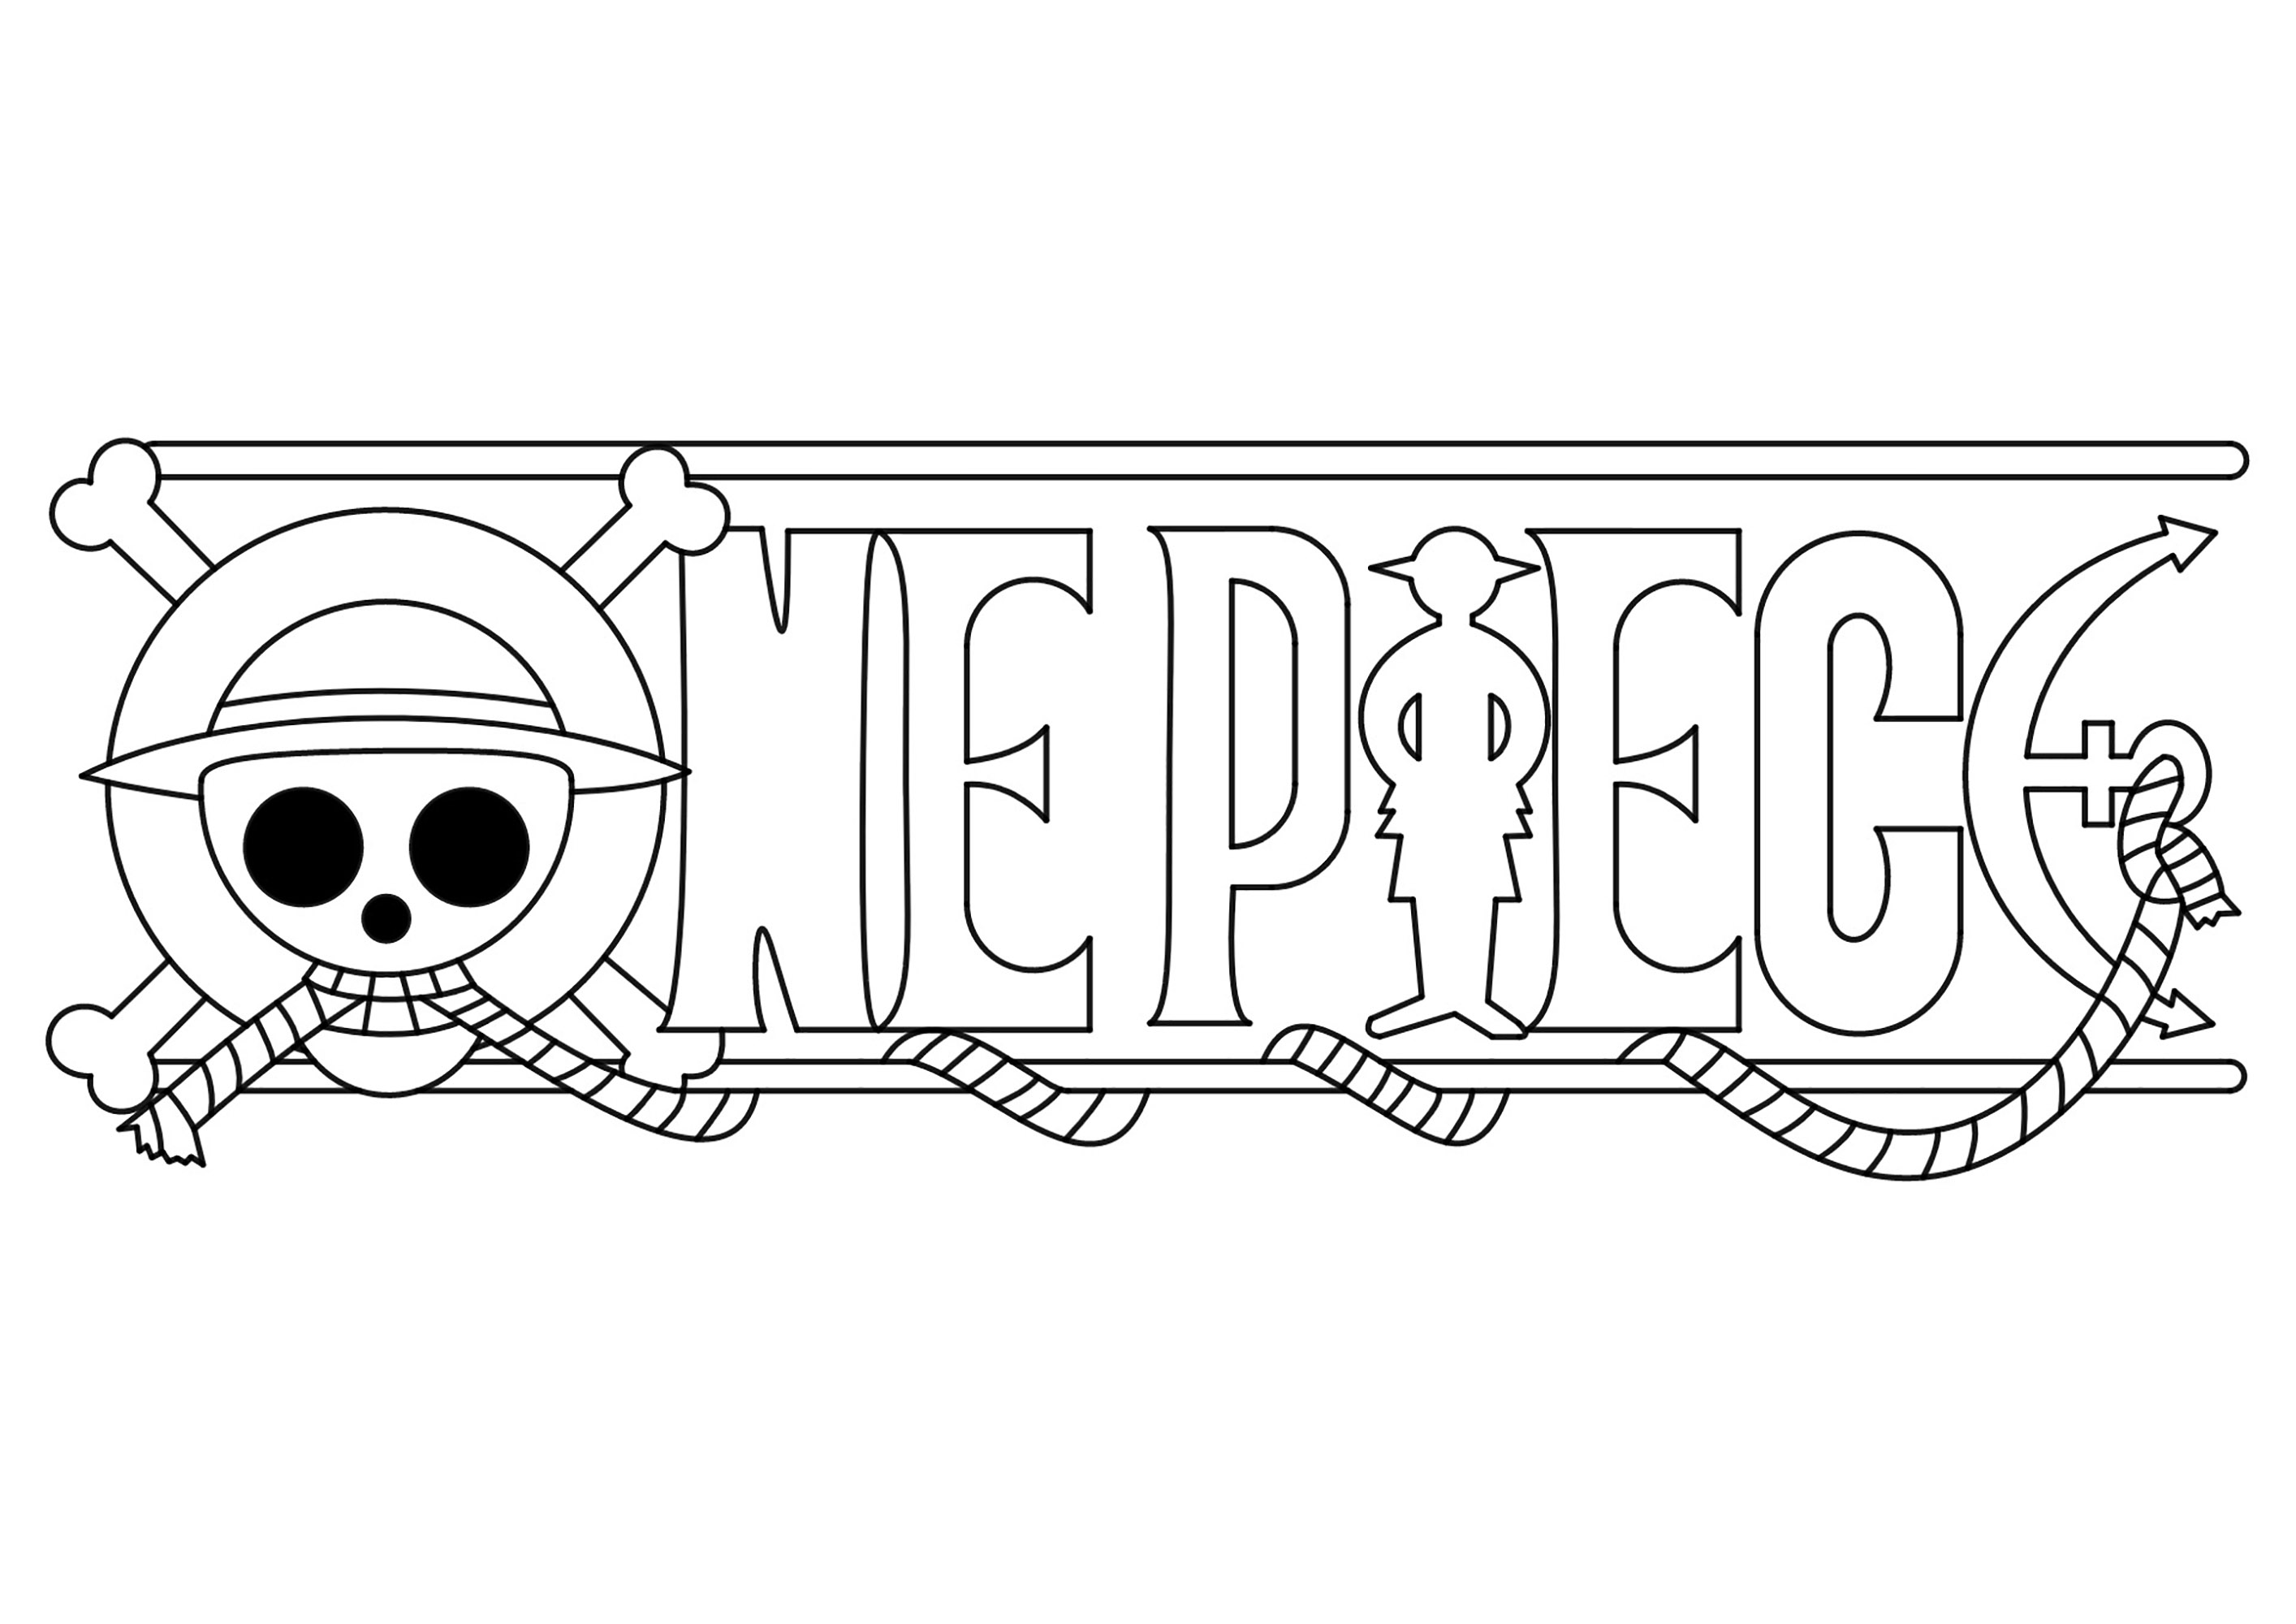 One Piece Notebook - One Piece Logo Notebook | One Piece Store-hdcinema.vn